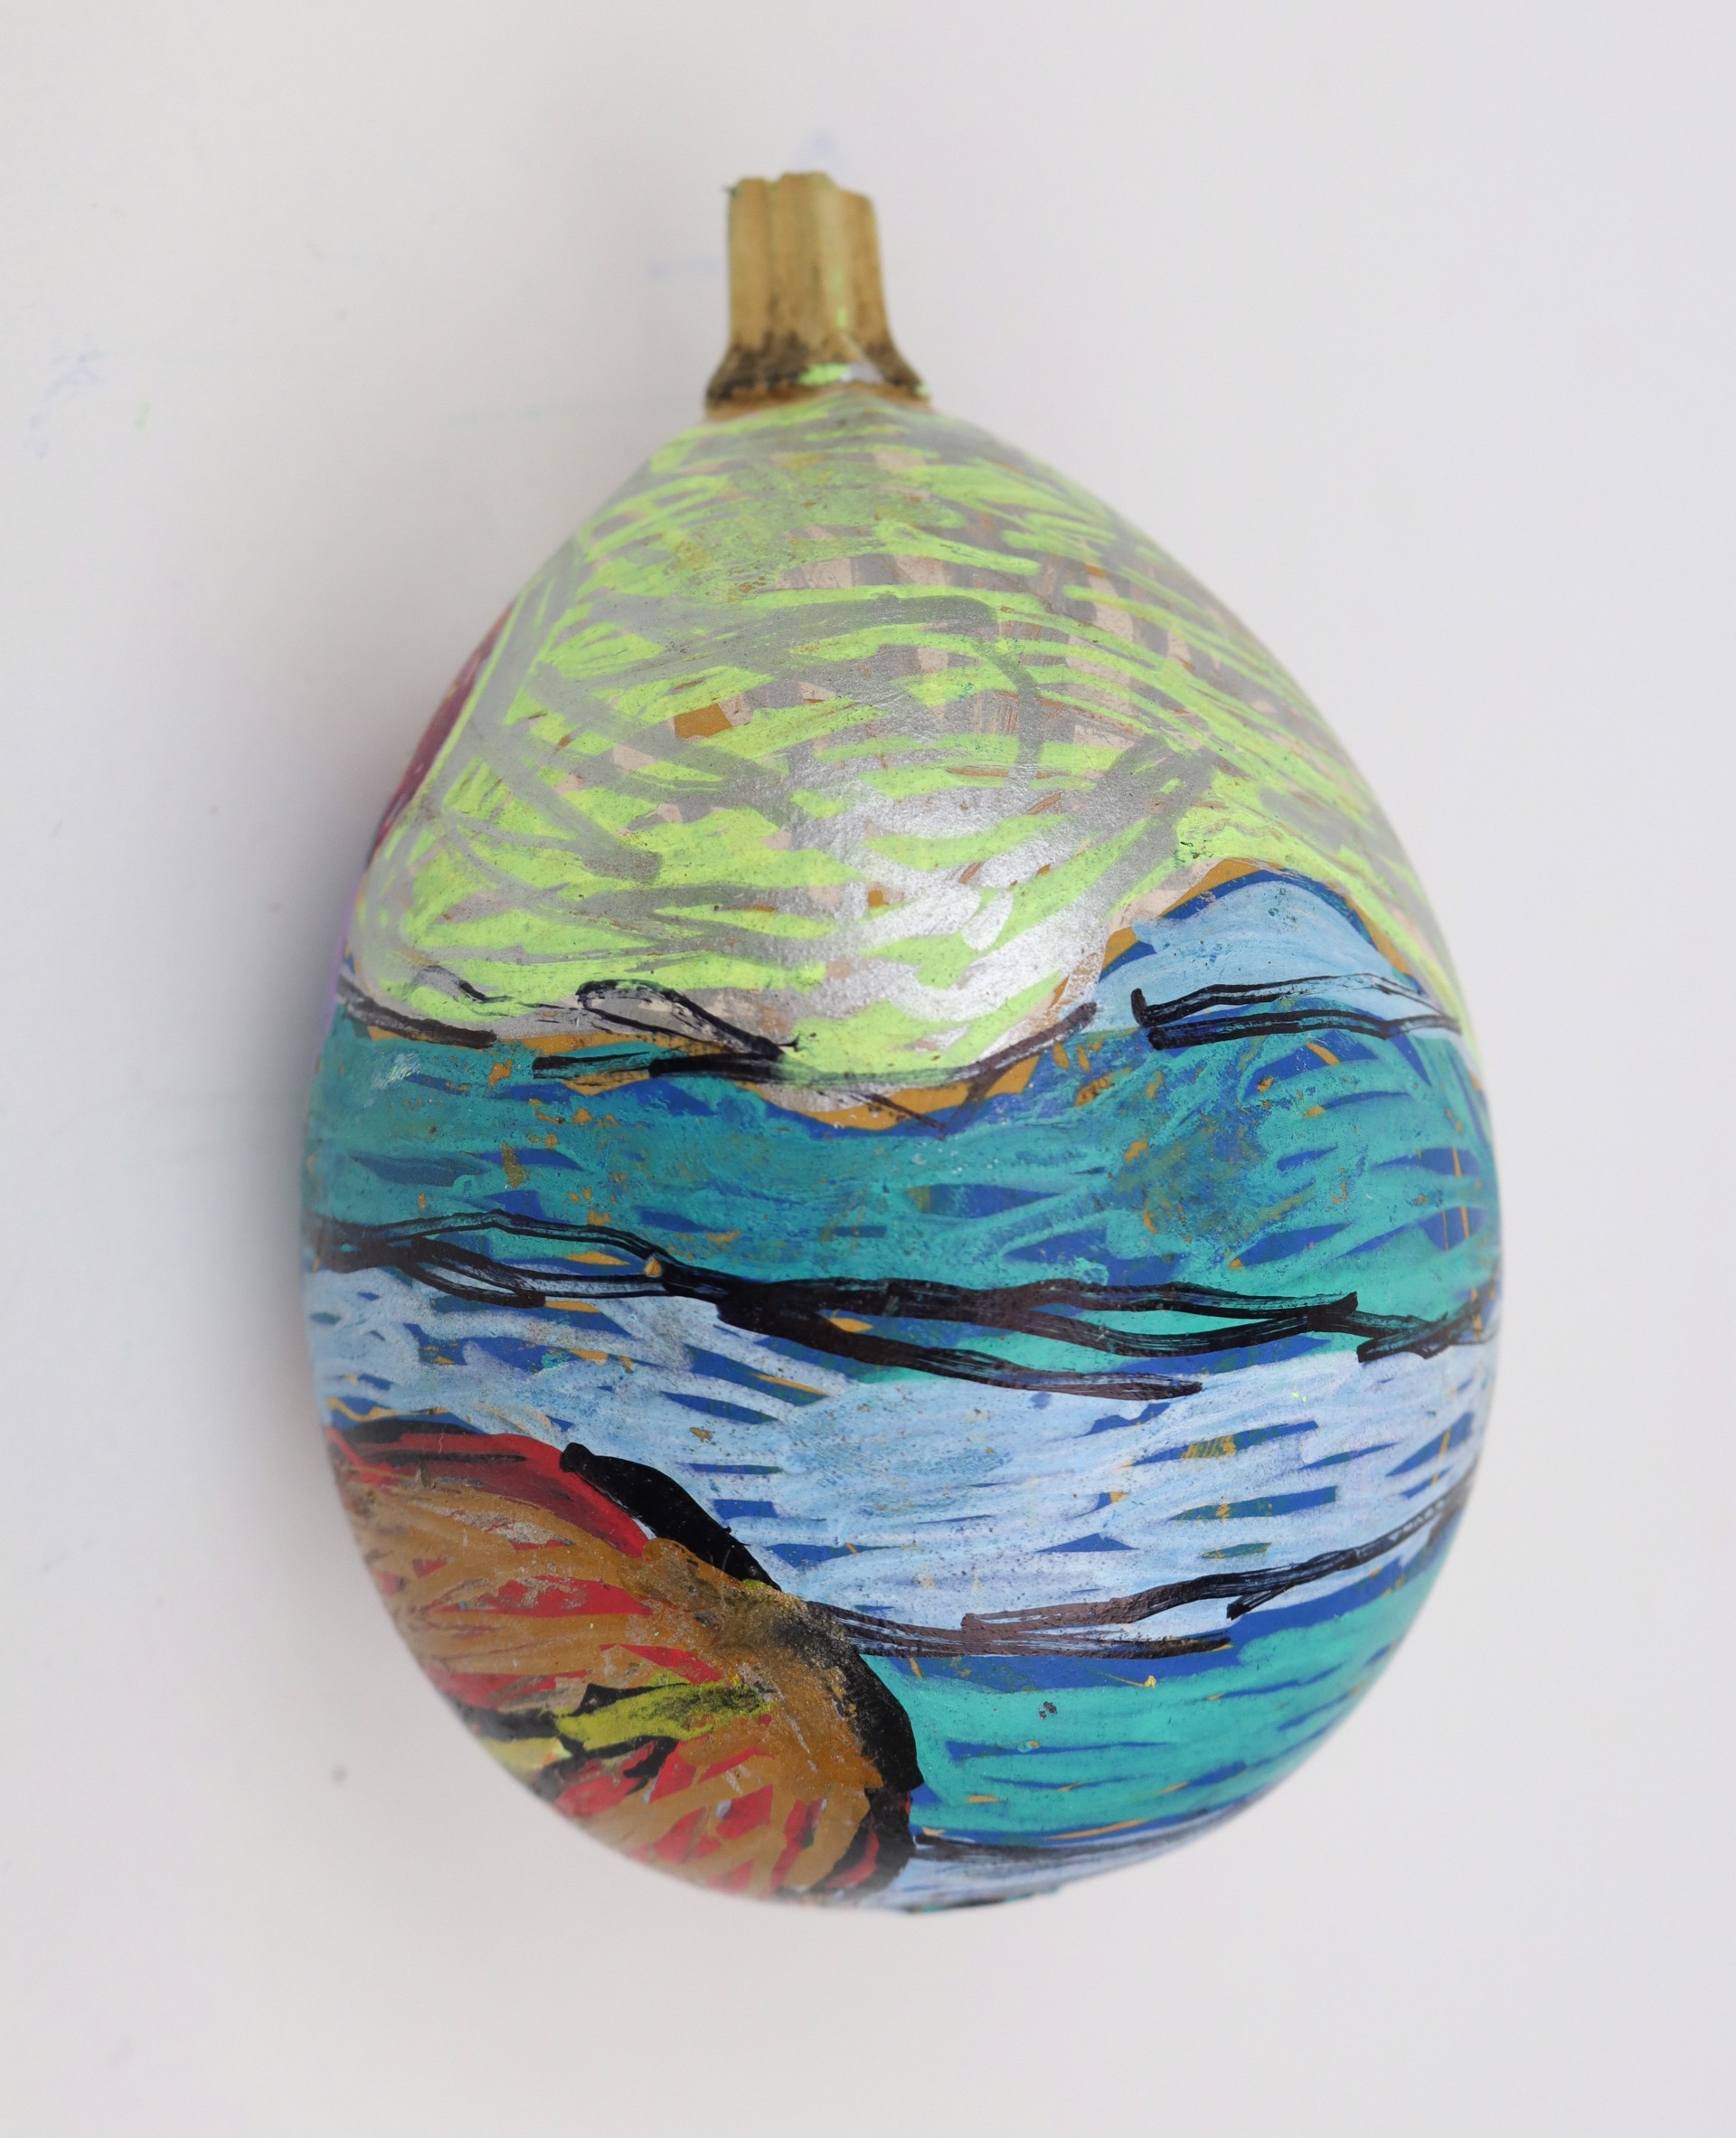 Challah Back Gourd (gourd ornament) by Mara Clawson